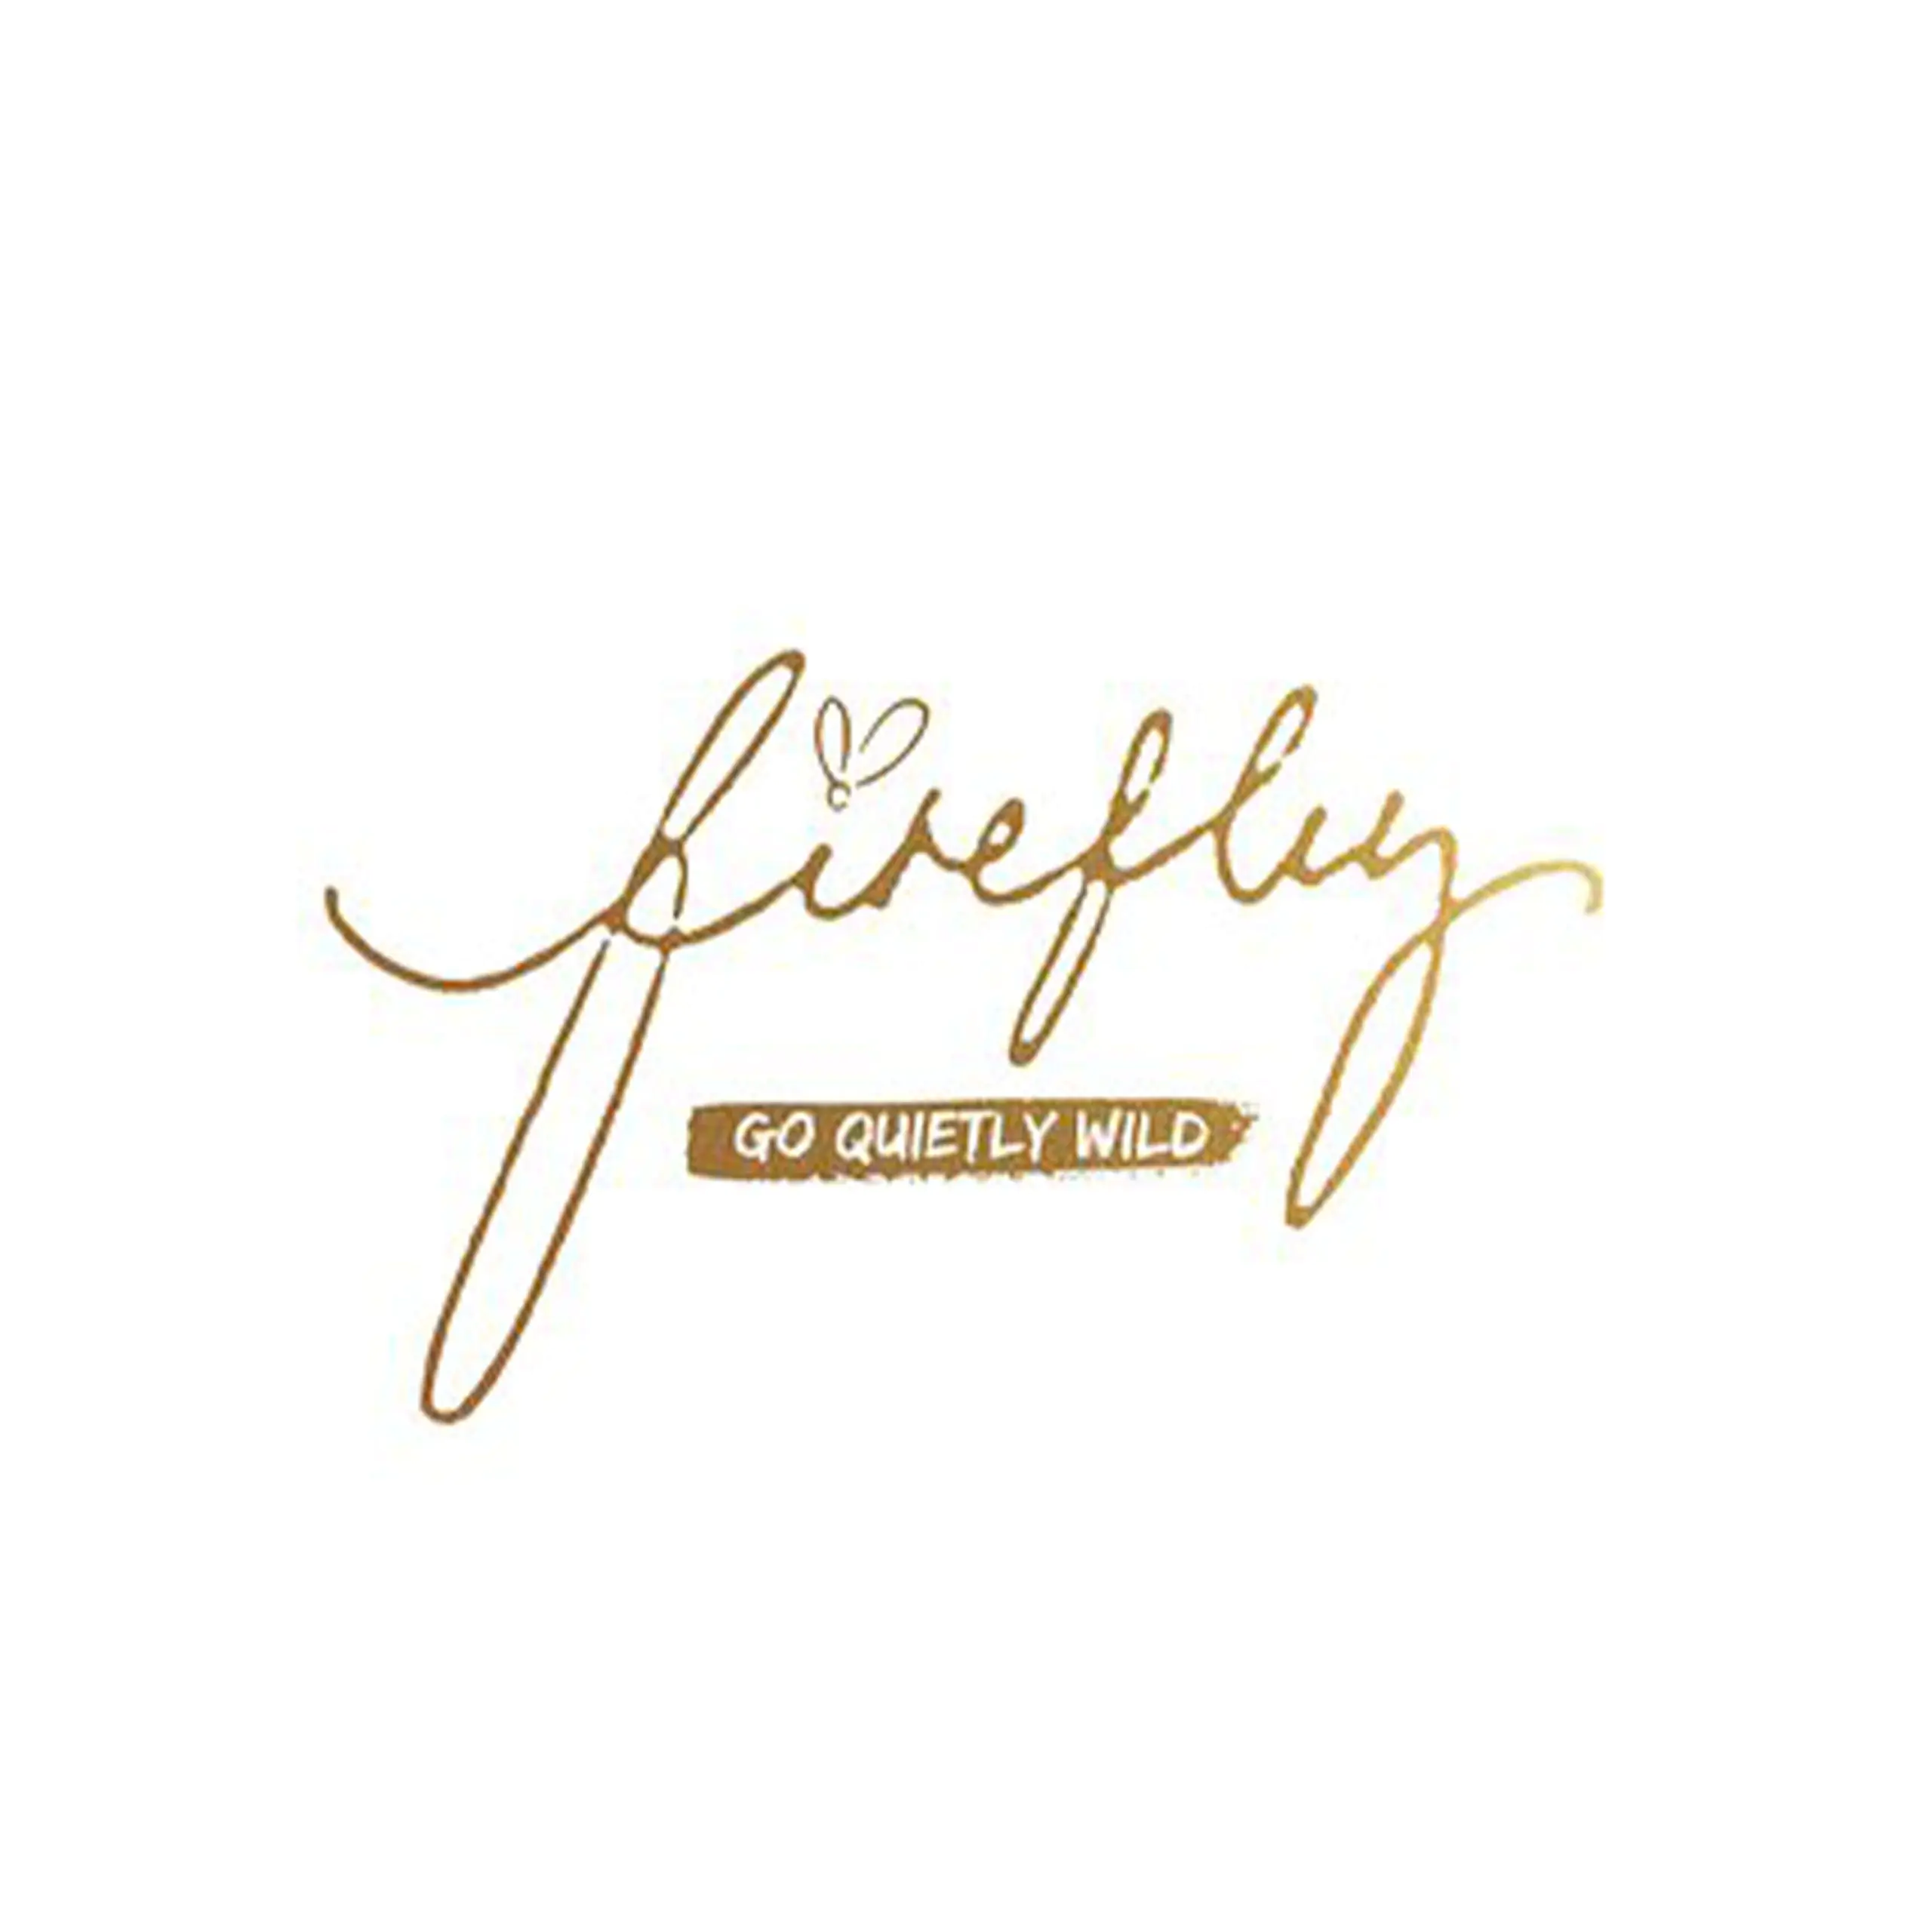 Firefly - Coming Soon in UAE